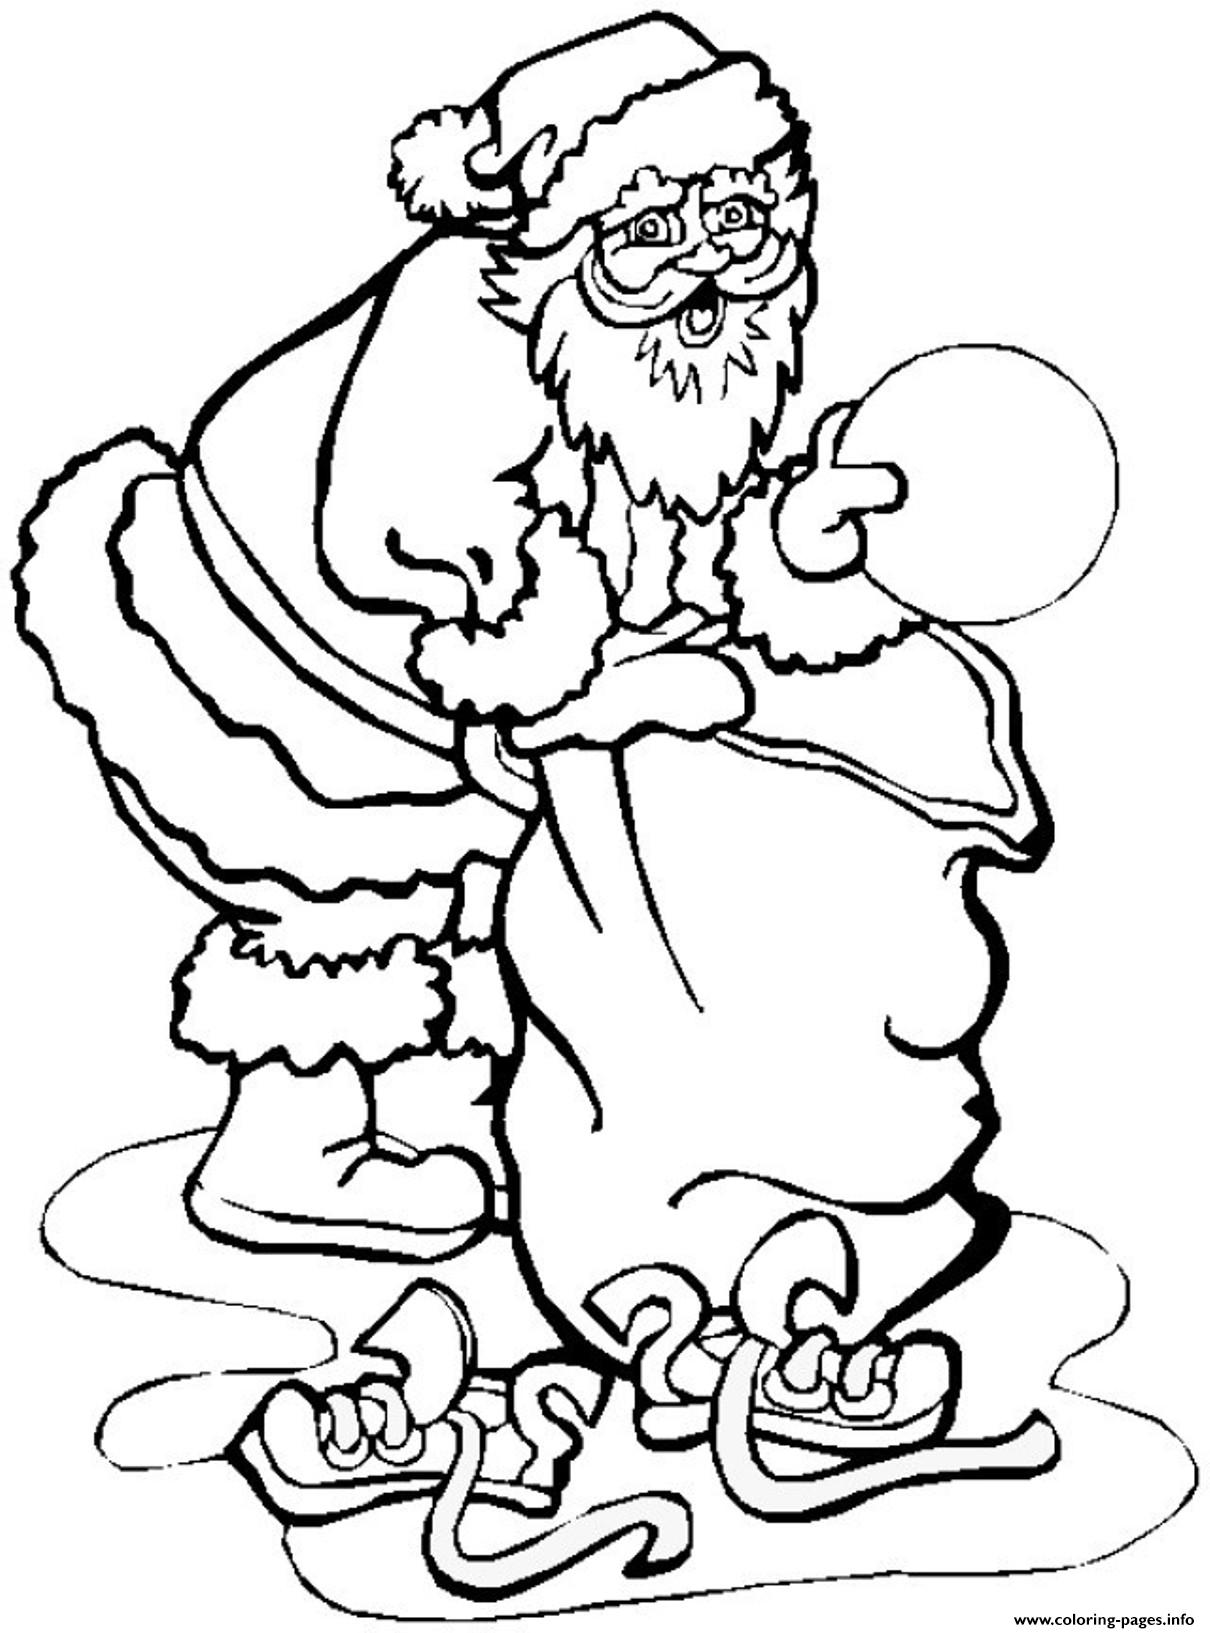 Christmas S For Kids Santa And Presents29bf coloring